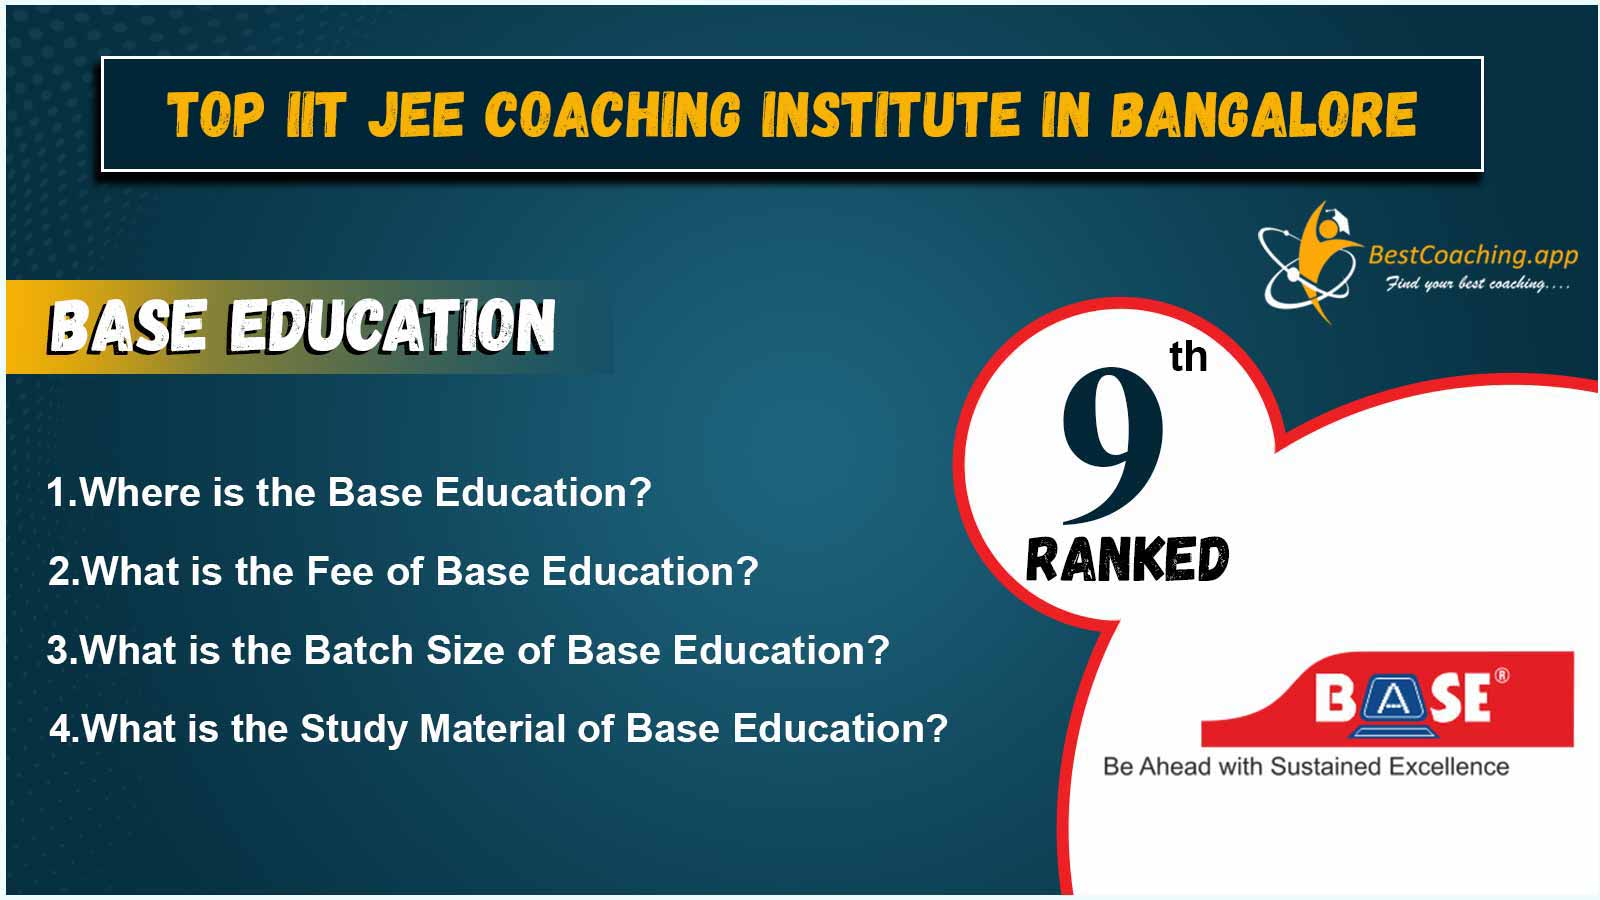 Top IIT JEE Coaching Institute In Bangalore